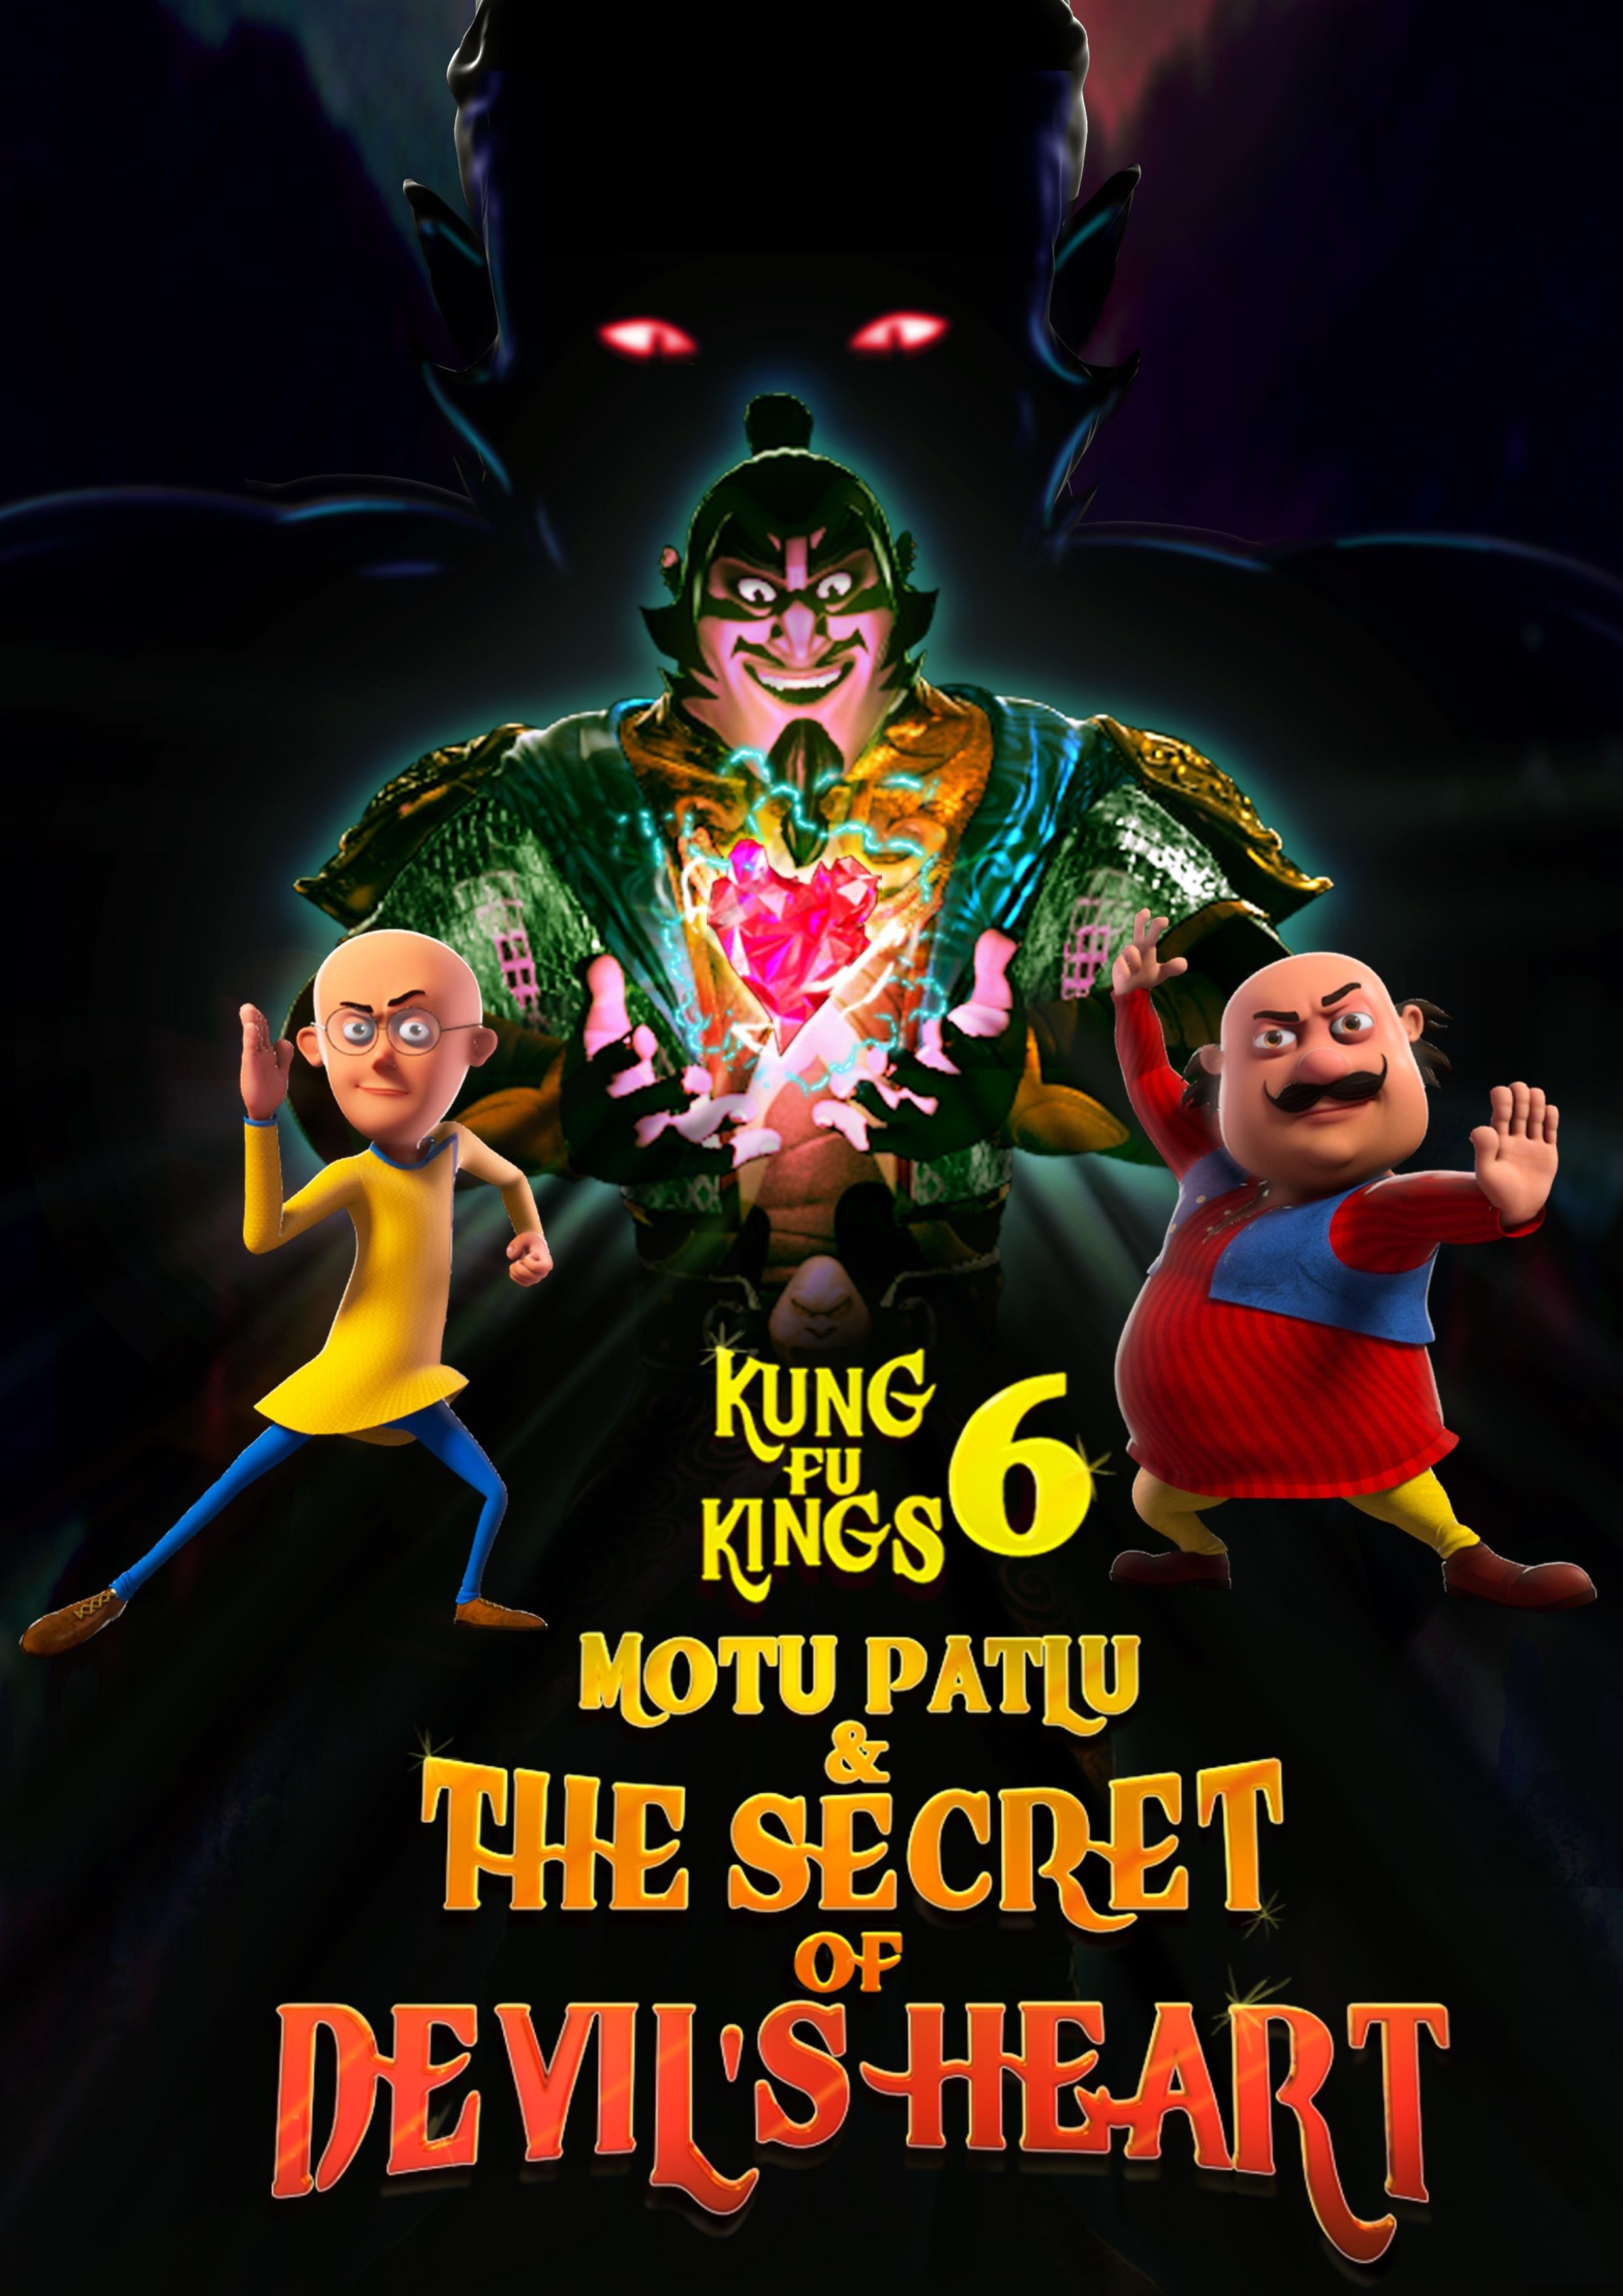 Motu Patlu And The Secret Of Devils Heart (2022) HDRip download full movie